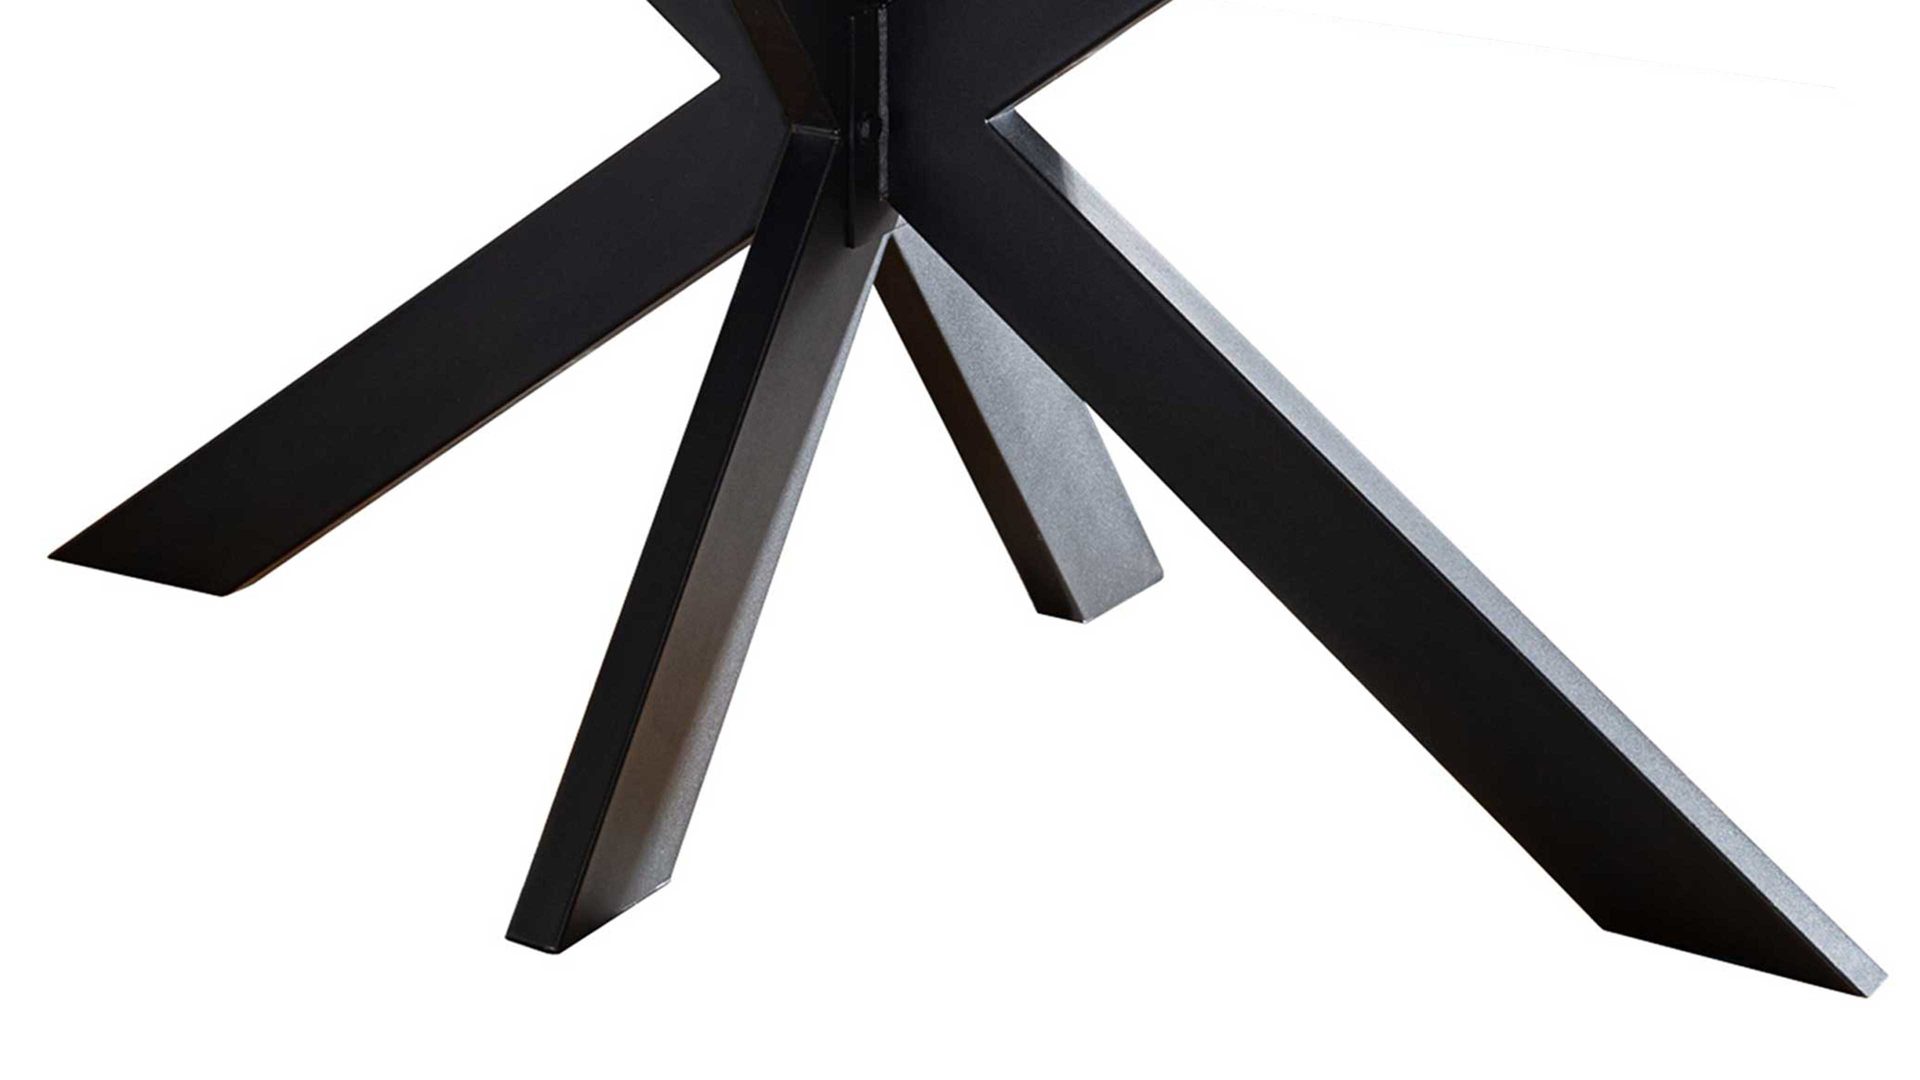 Tischgestell 3s frankenmöbel aus Metall in Schwarz 3S frankenmöbel Spinnenfußgestell TI-0599 schwarzes Metall